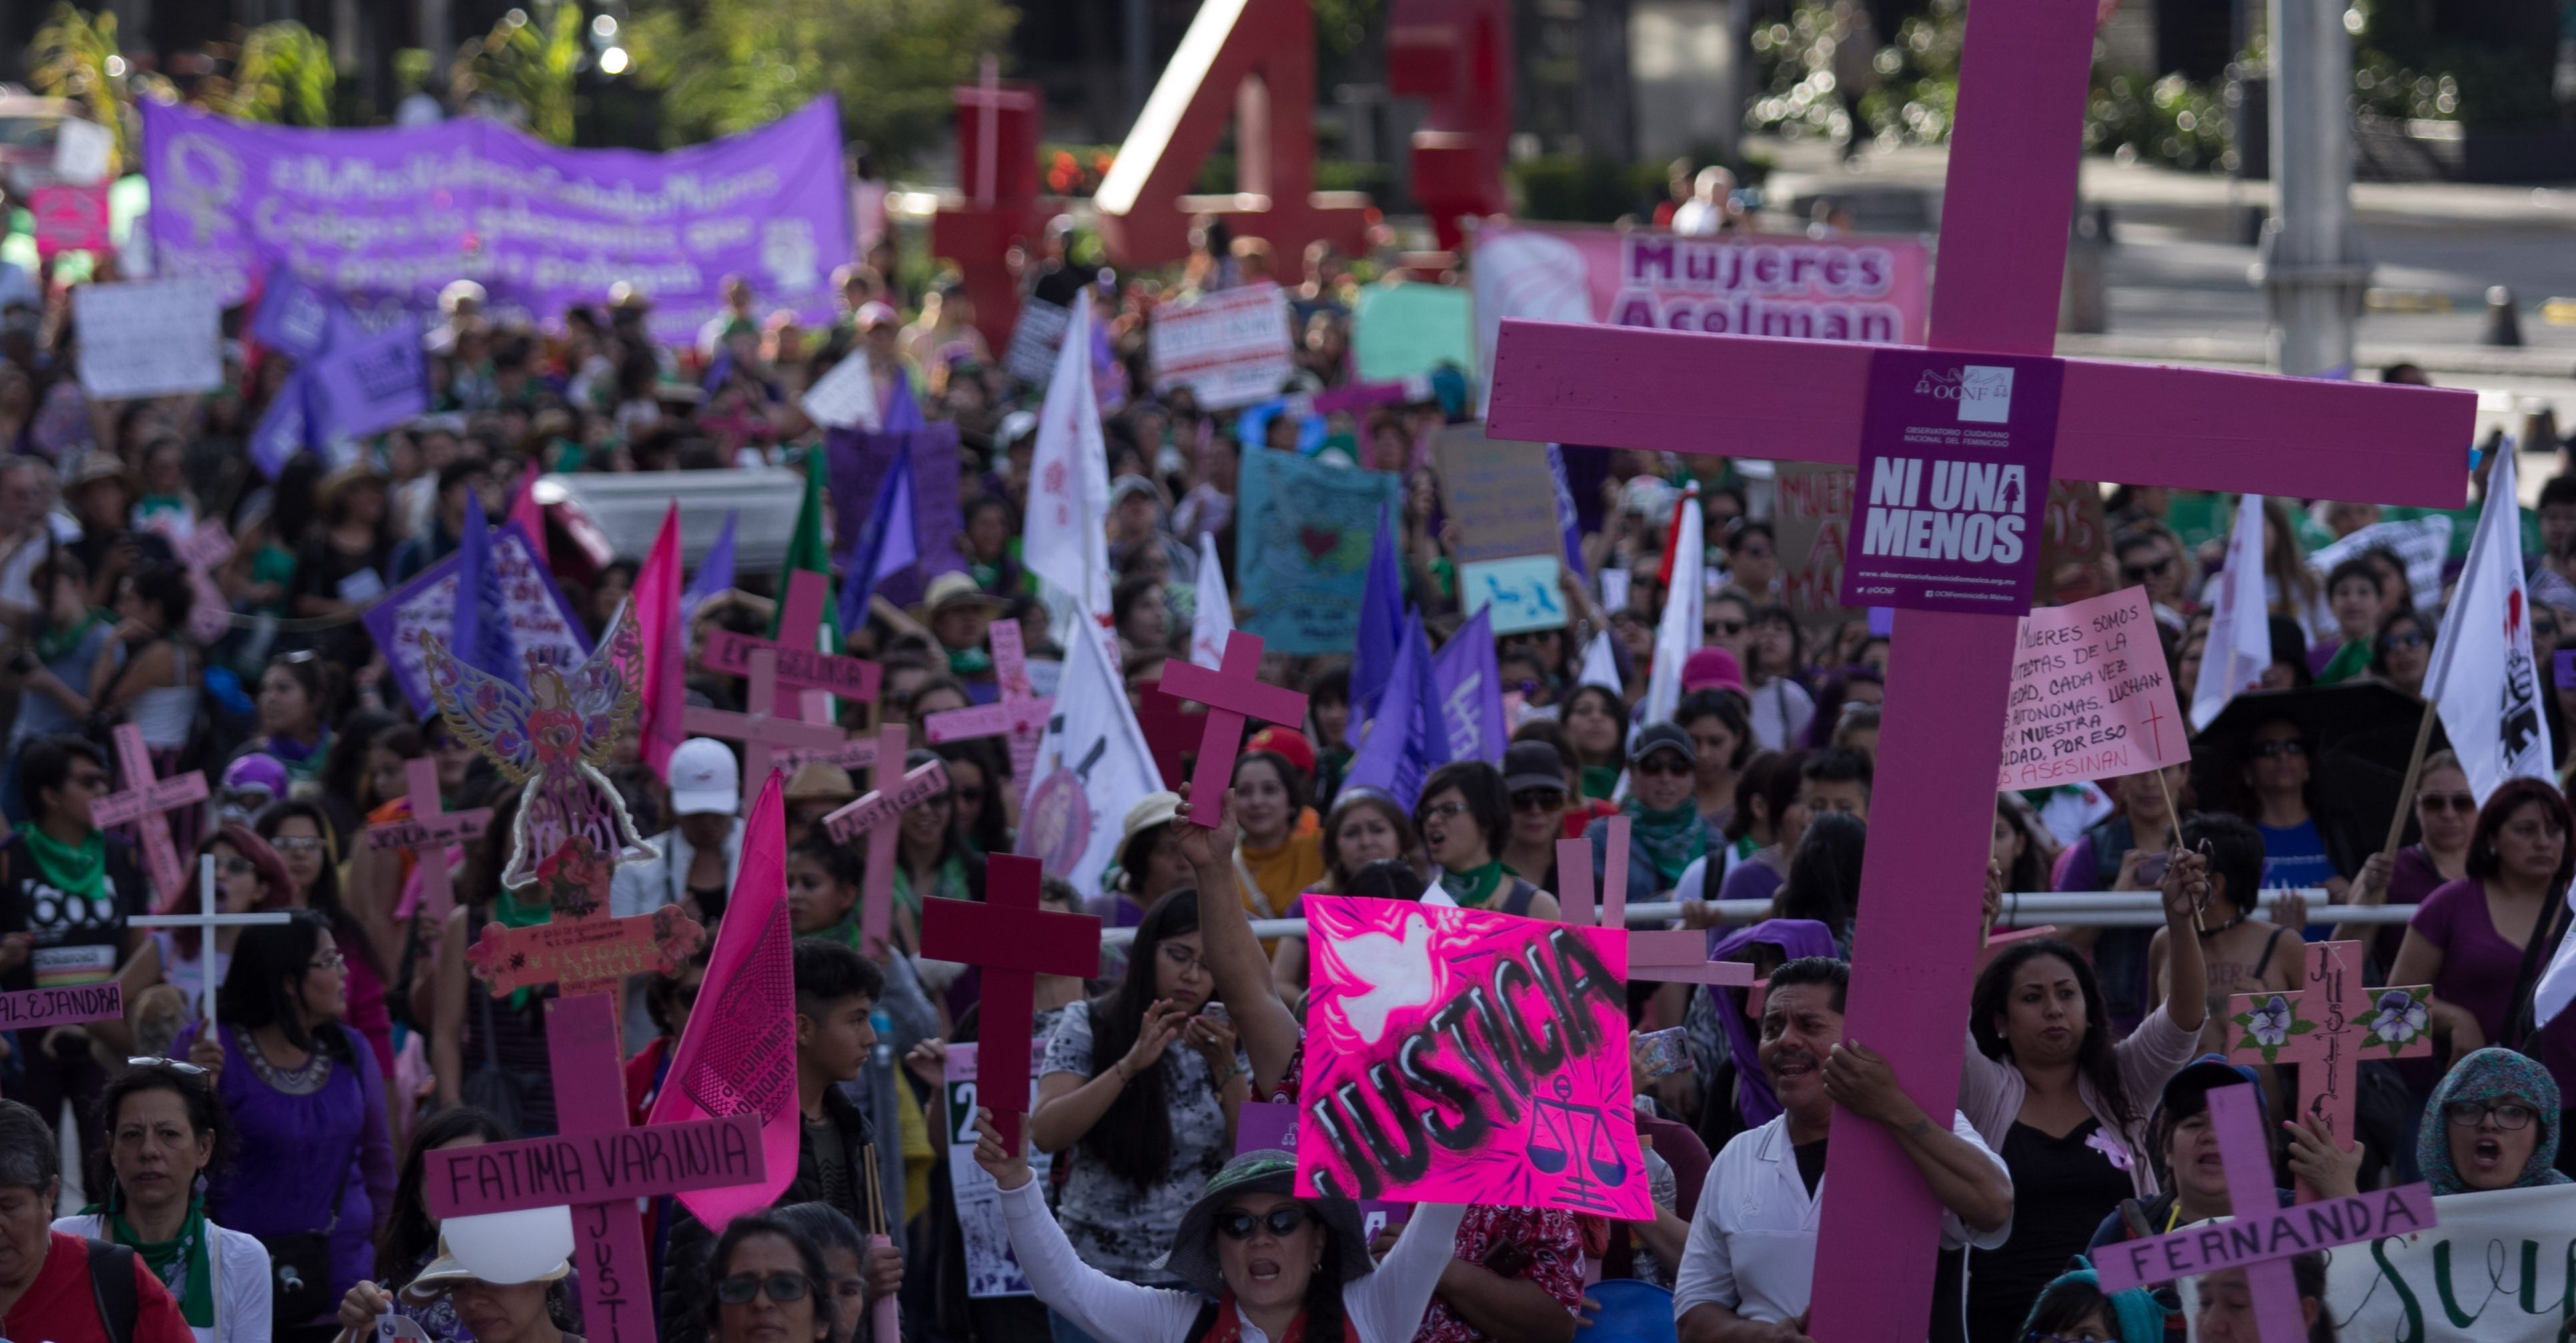 Alert's gender, with pending implementation in Jalisco